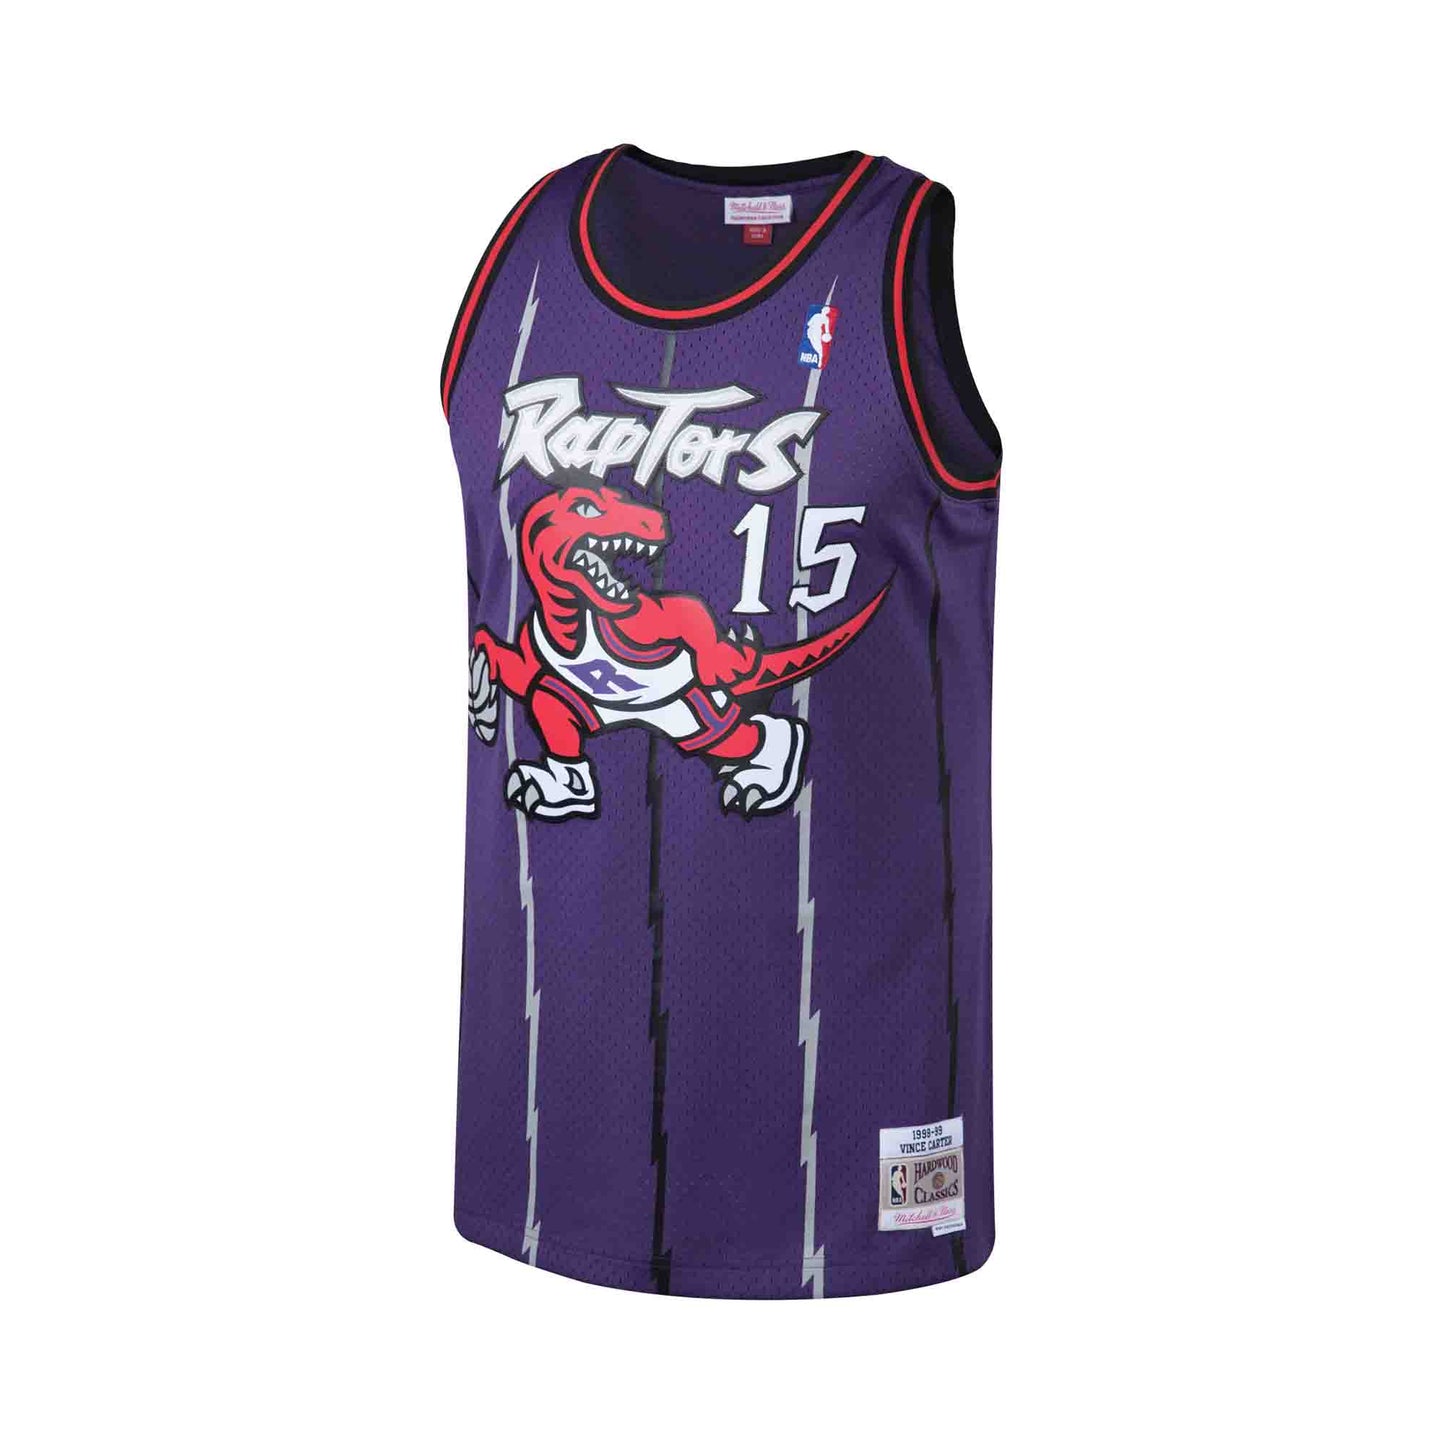 NBA Swingman Jersey Toronto Raptors Home 1998-99 Vince Carter #15